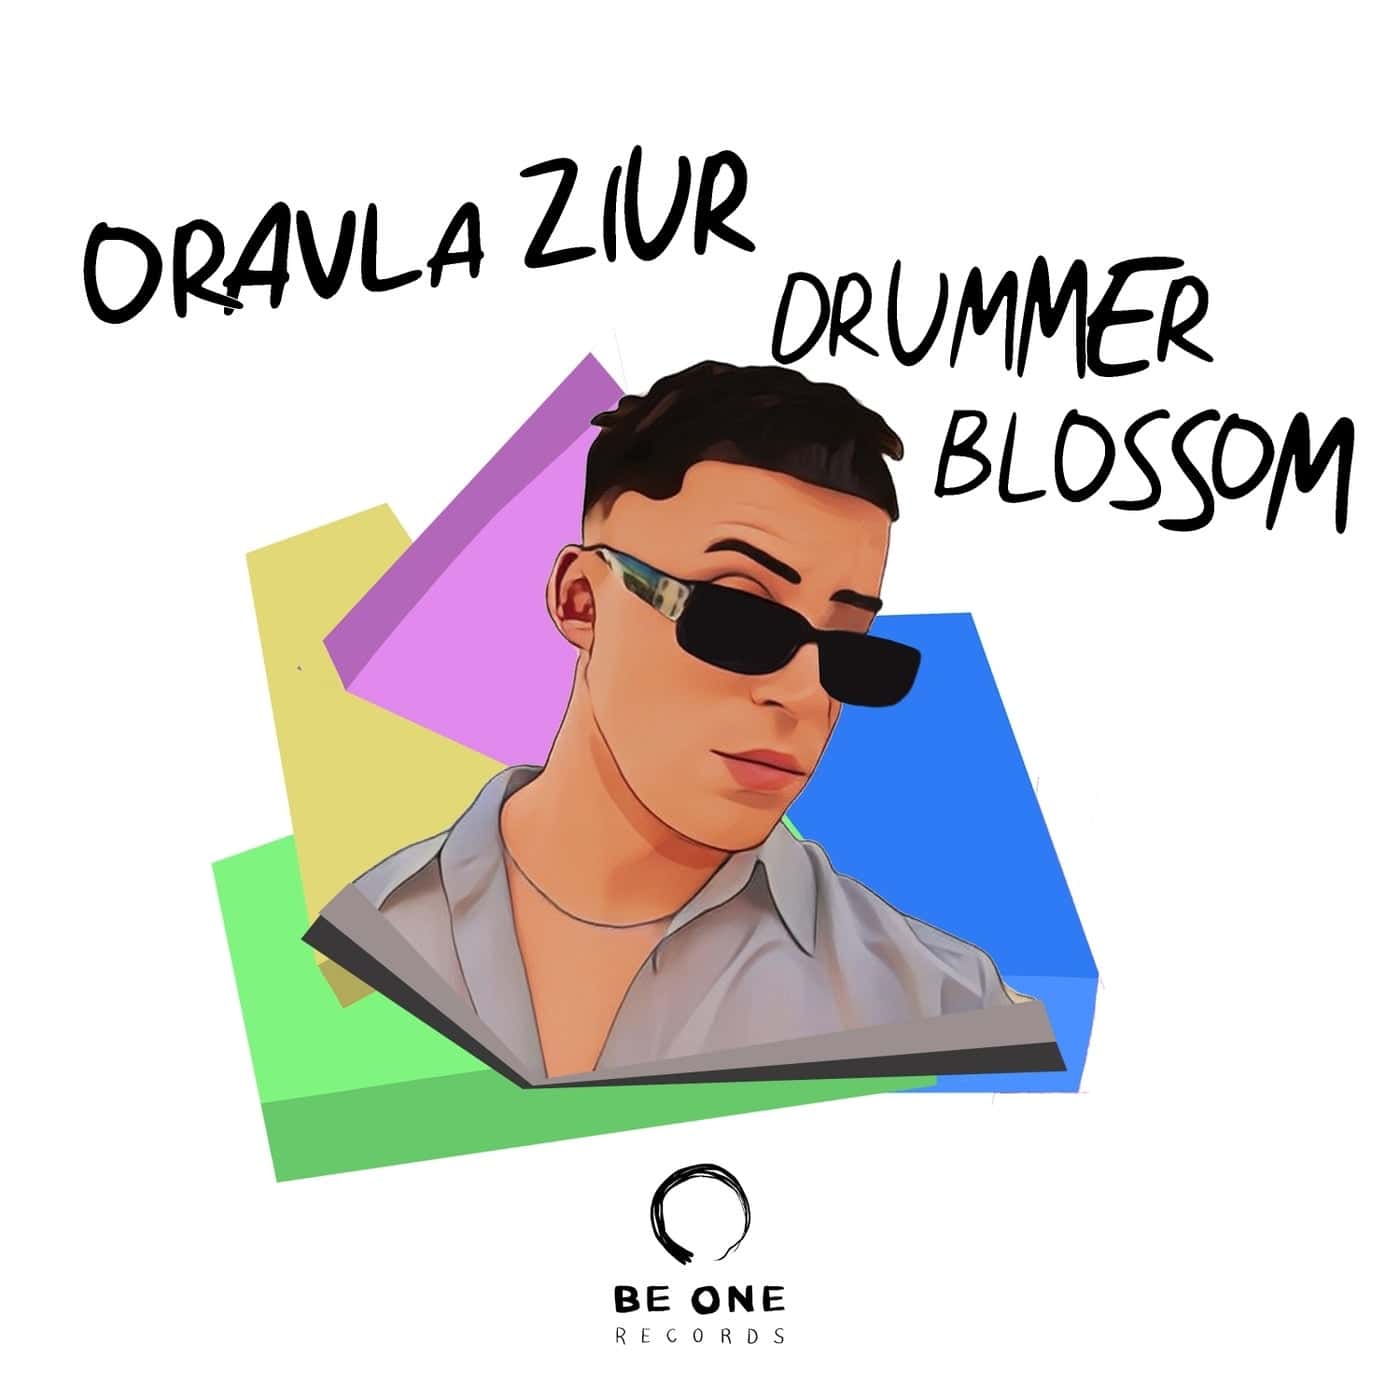 image cover: Oravla Ziur - Drummer Blossom / BOR374